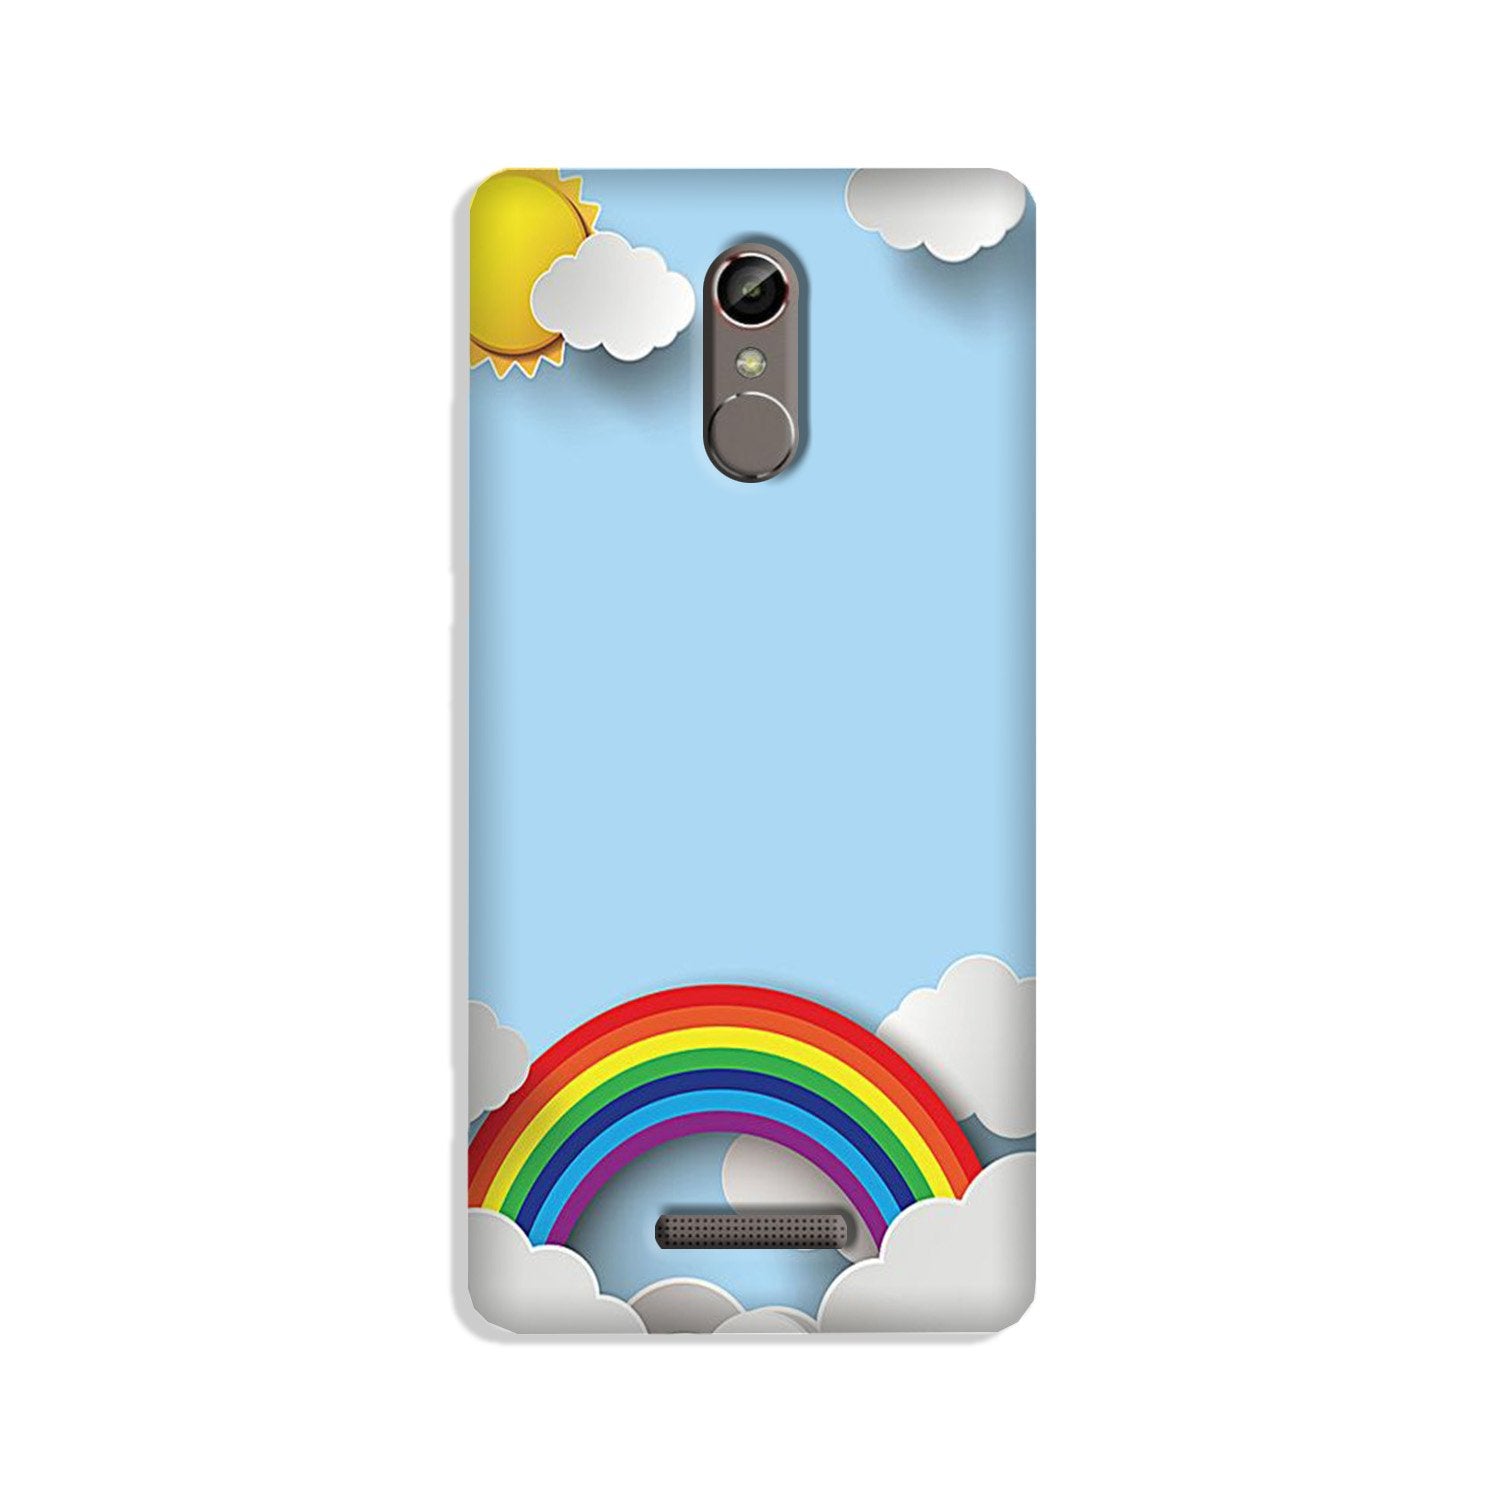 Rainbow Case for Gionee S6s (Design No. 225)